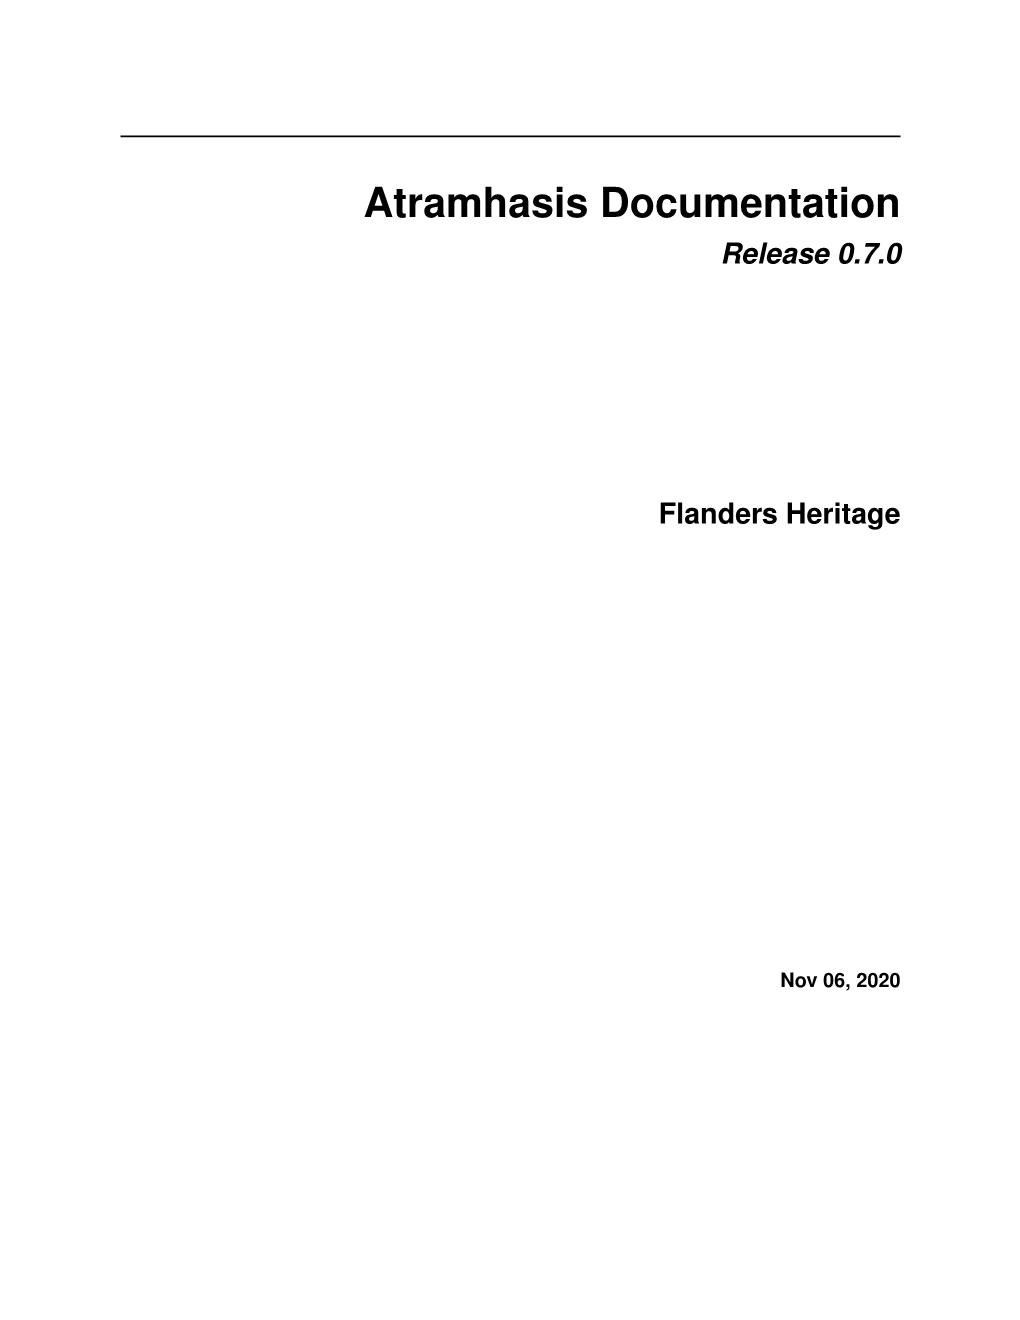 Atramhasis Documentation Release 0.7.0